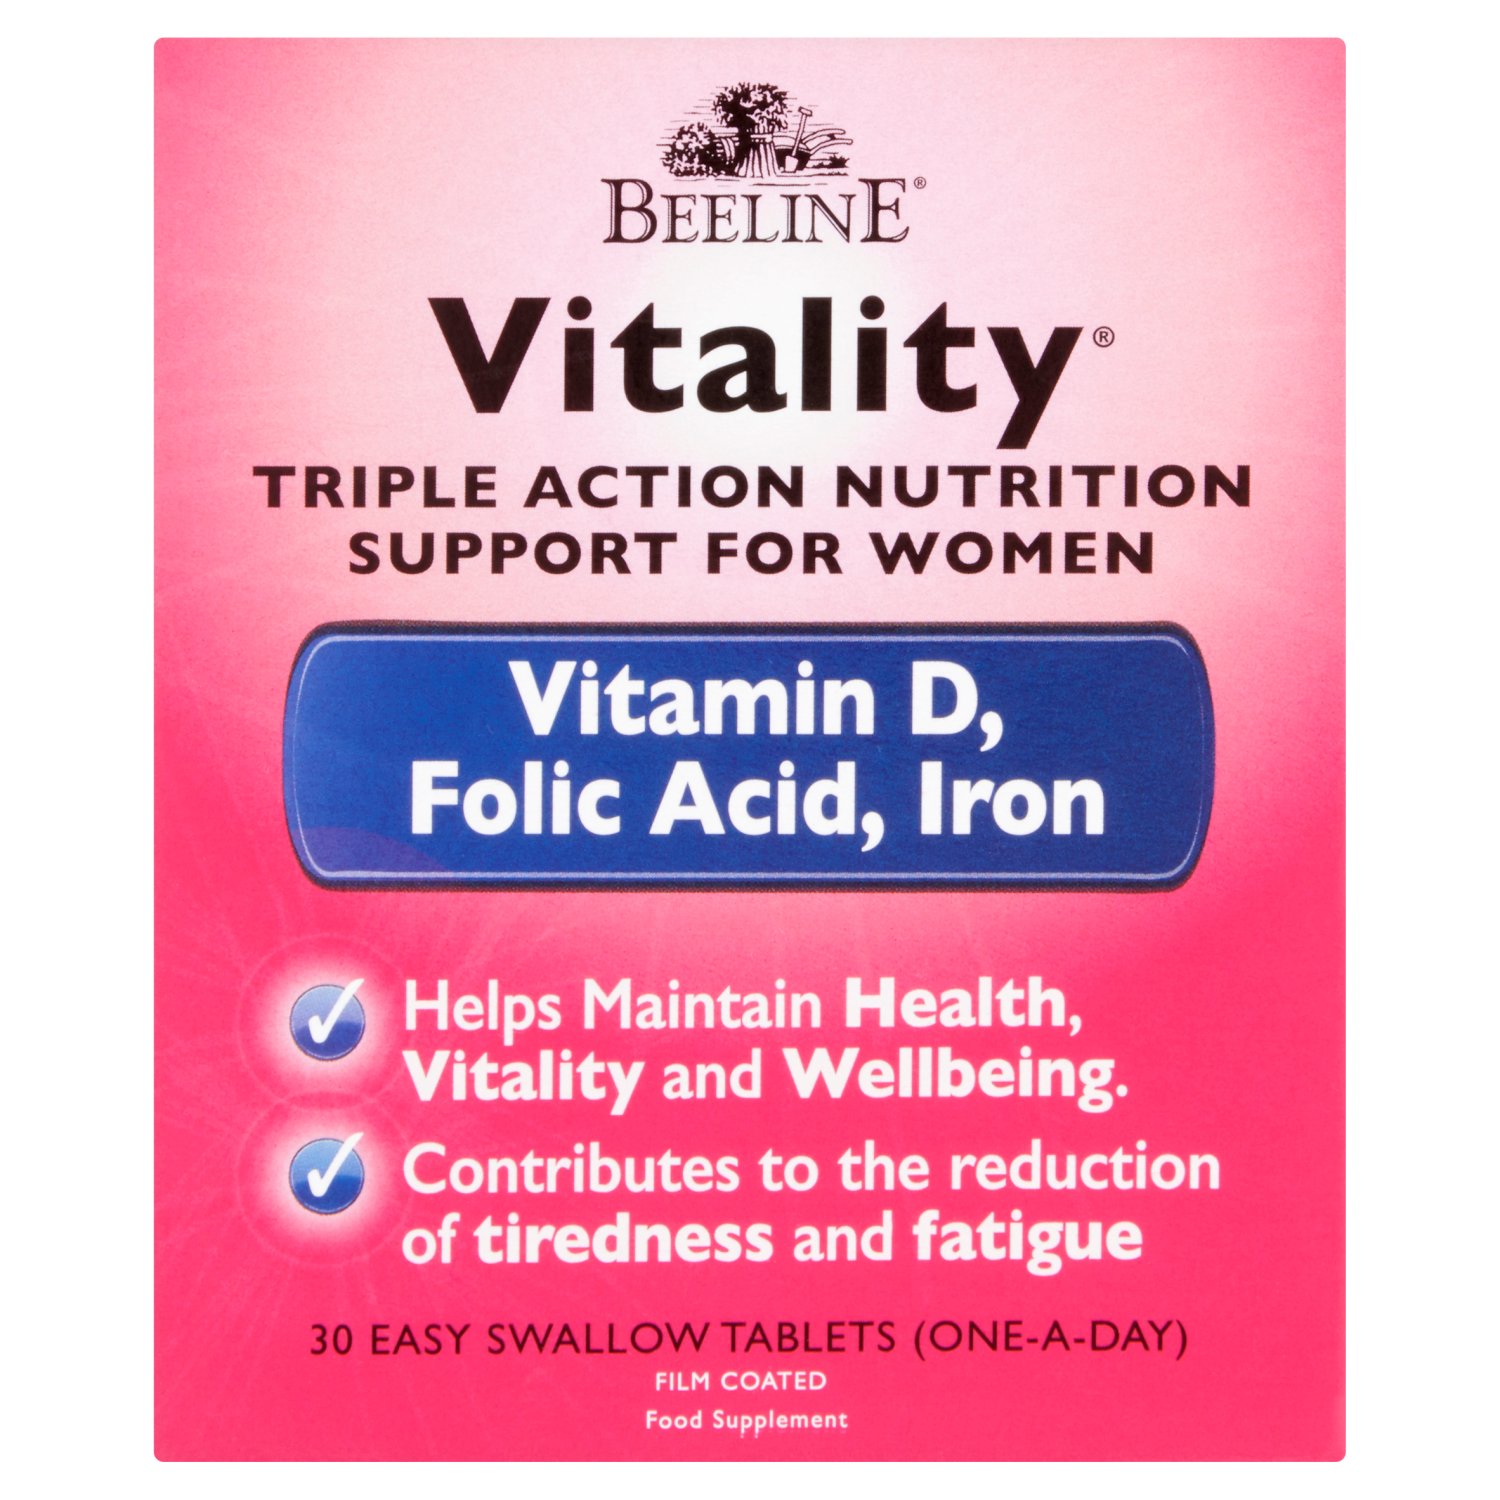 BeeLine Vitality Vitamin D, Folic Acid and Iron Tablets (30 Piece)